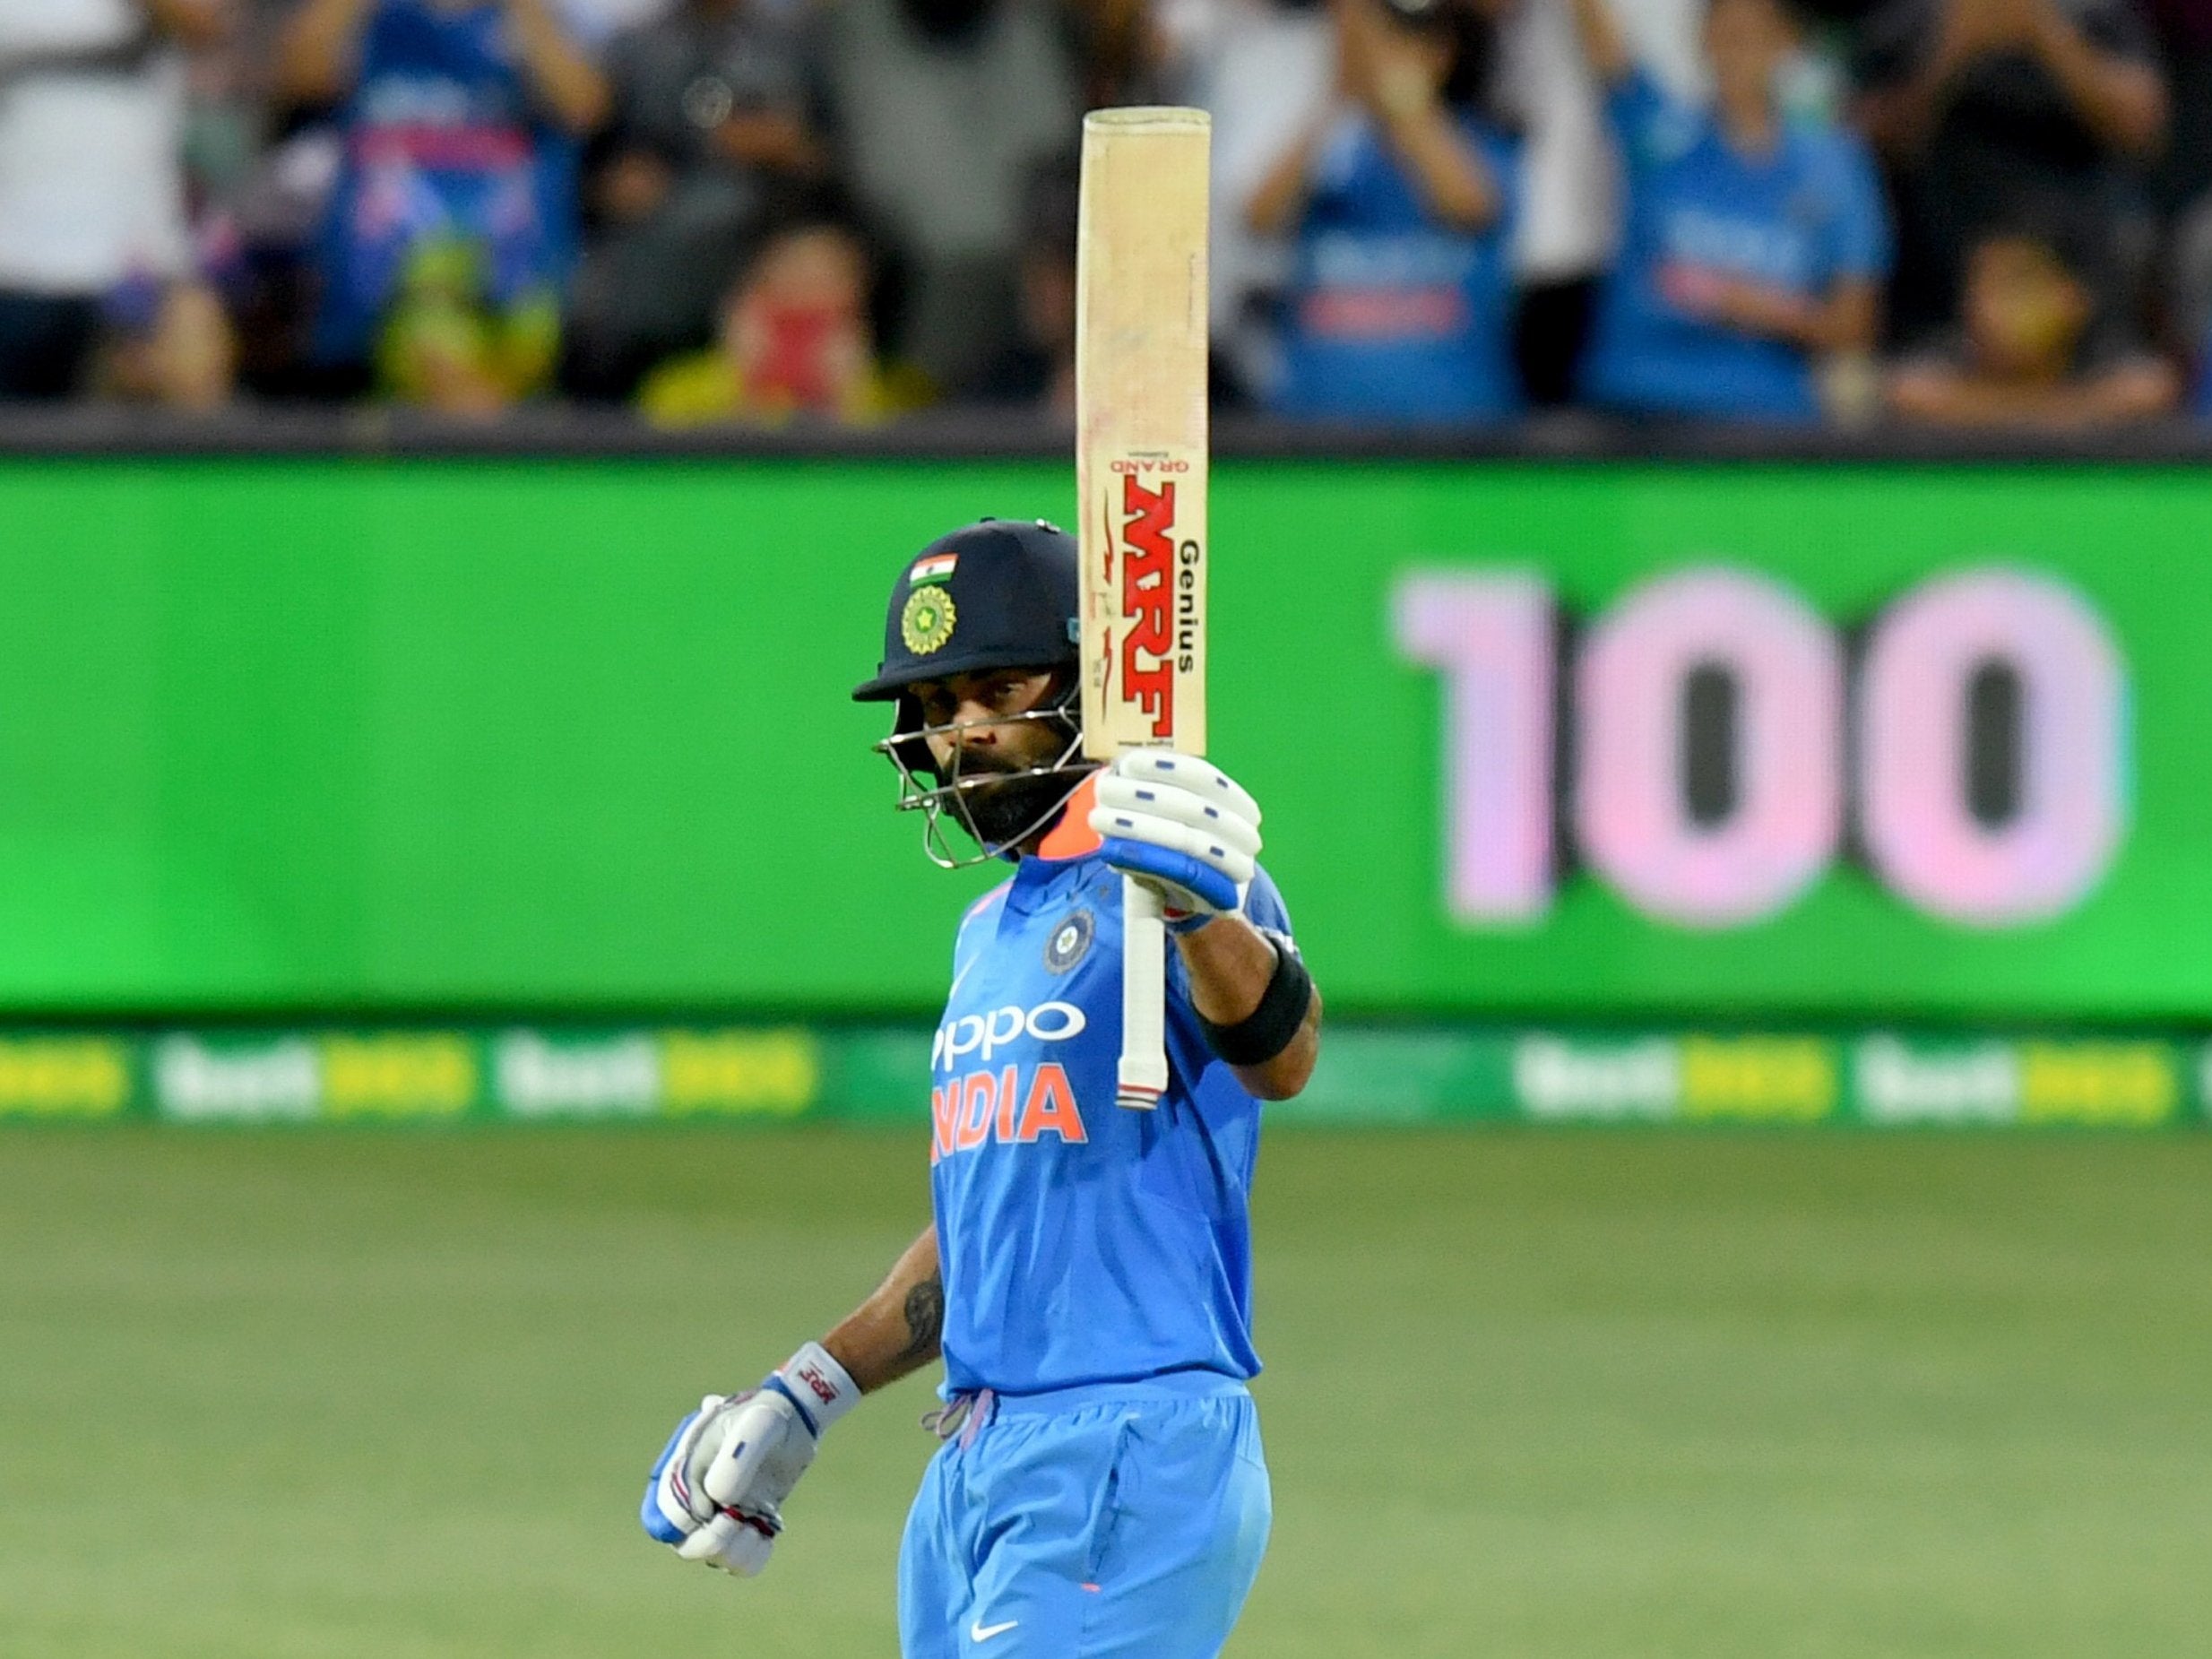 India's captain scored his 39th ODI century